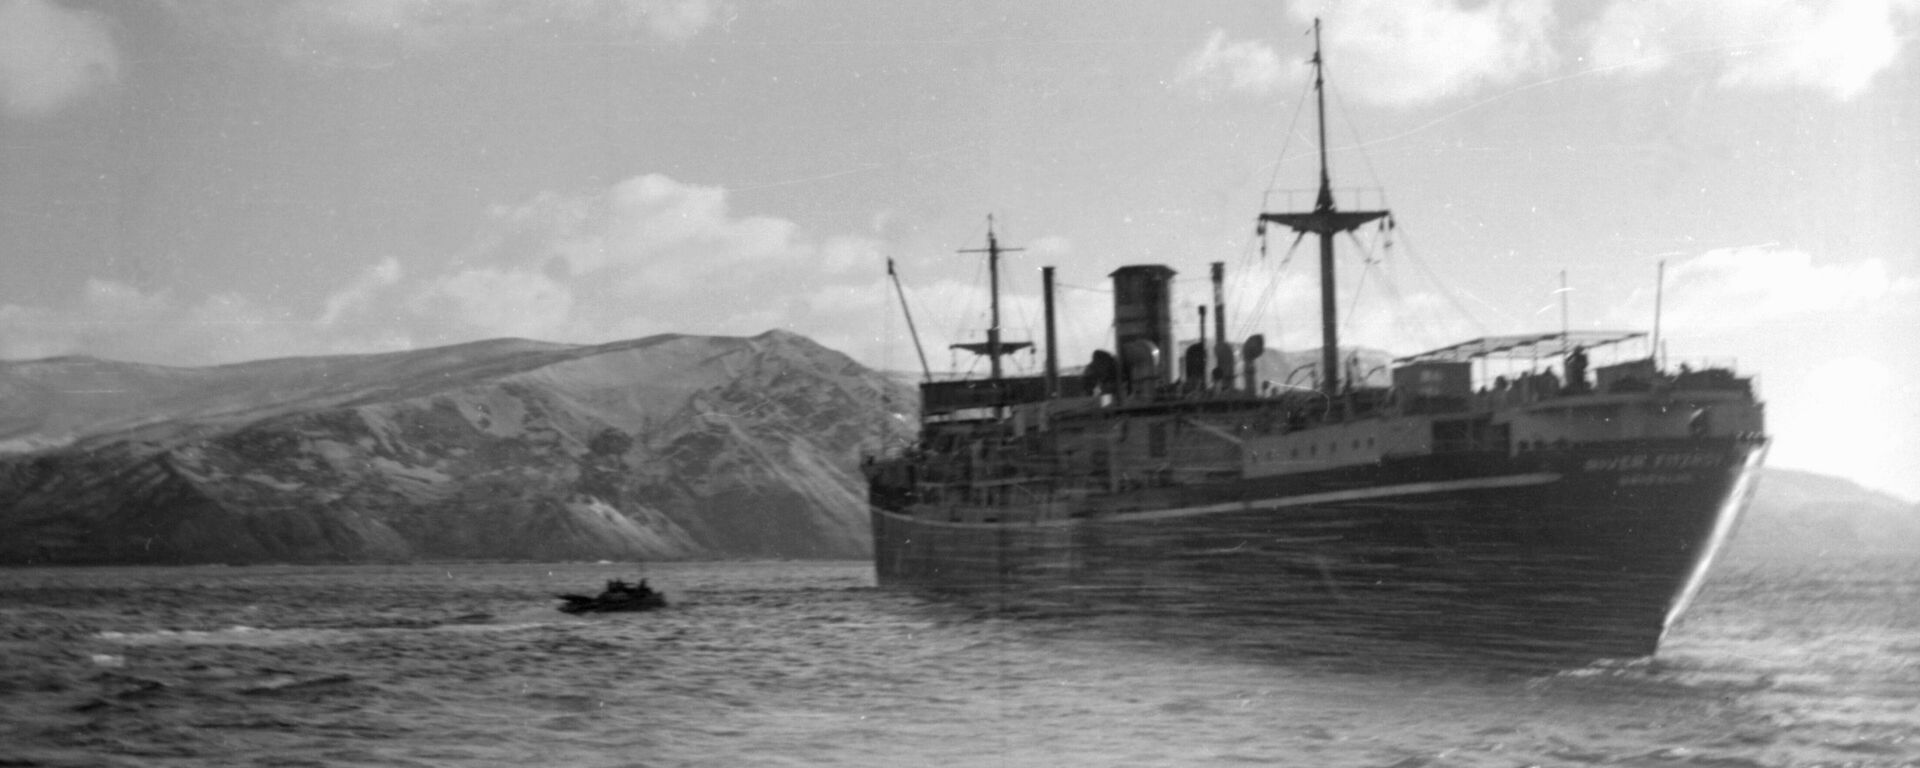 Black and white image of ship at anchor of coast